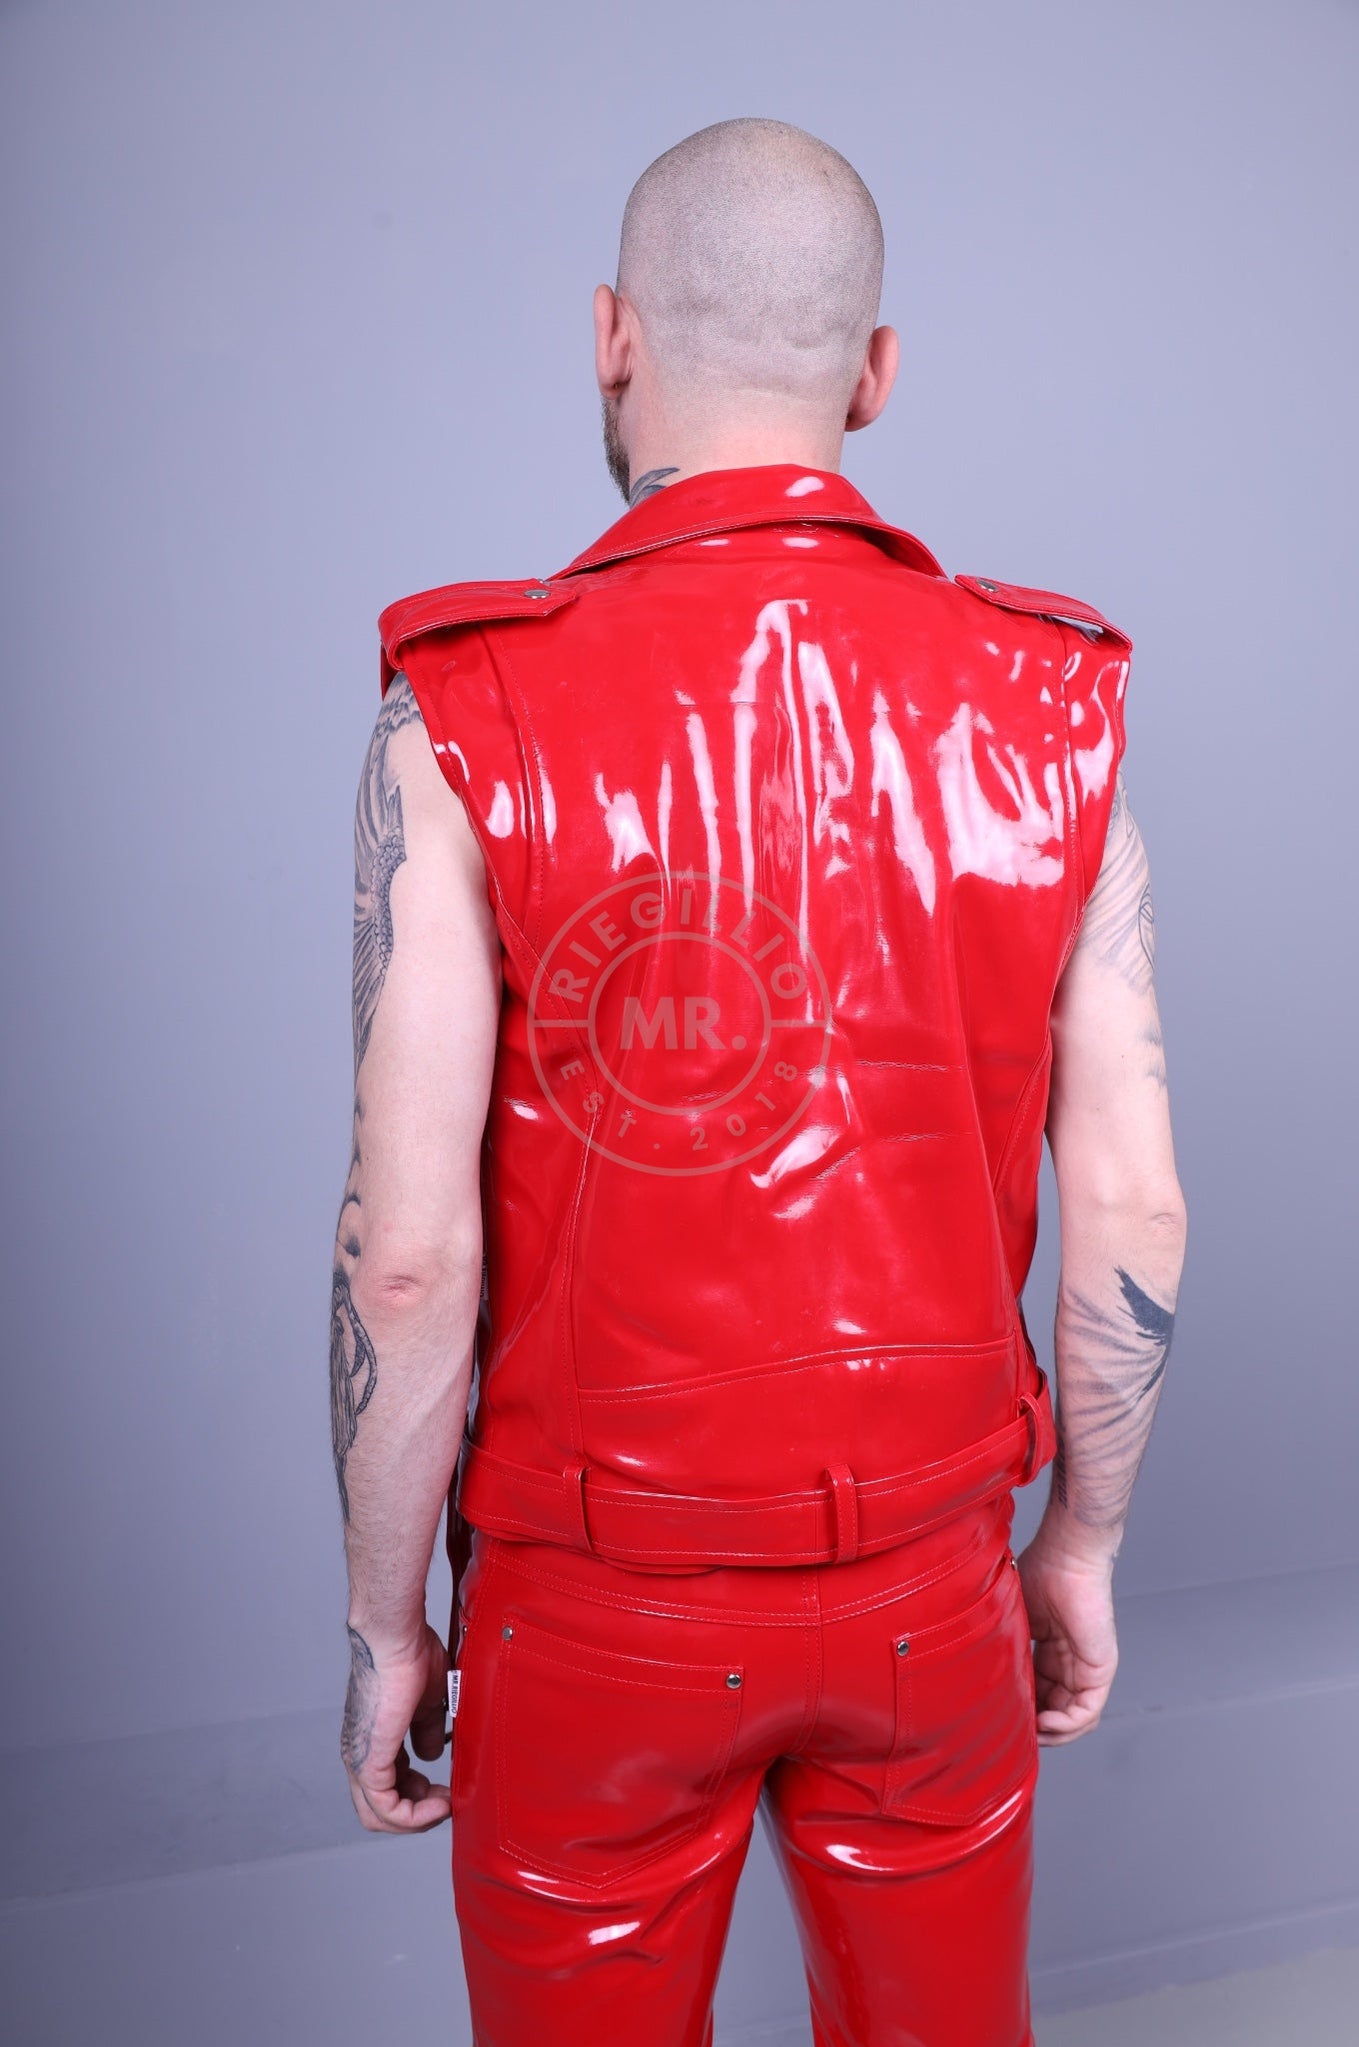 Red PVC Sleeveless Brando Jacket at MR. Riegillio